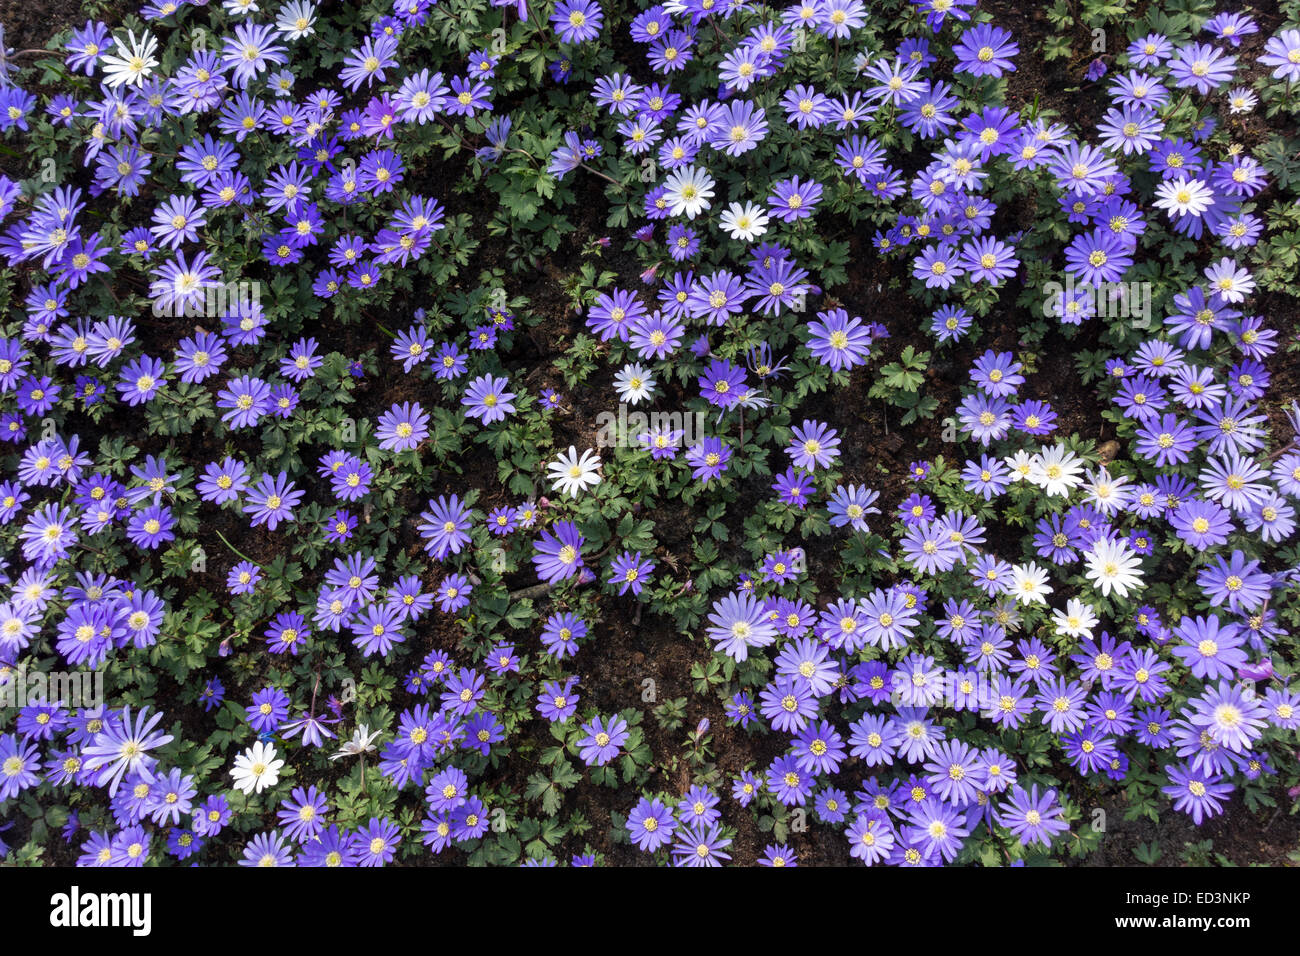 Anemone Blanda Blue Shades Blue Anemones. A carpet of blue-flowered Anemones, Grecian Windflowers Winter Windflowers under trees Stock Photo